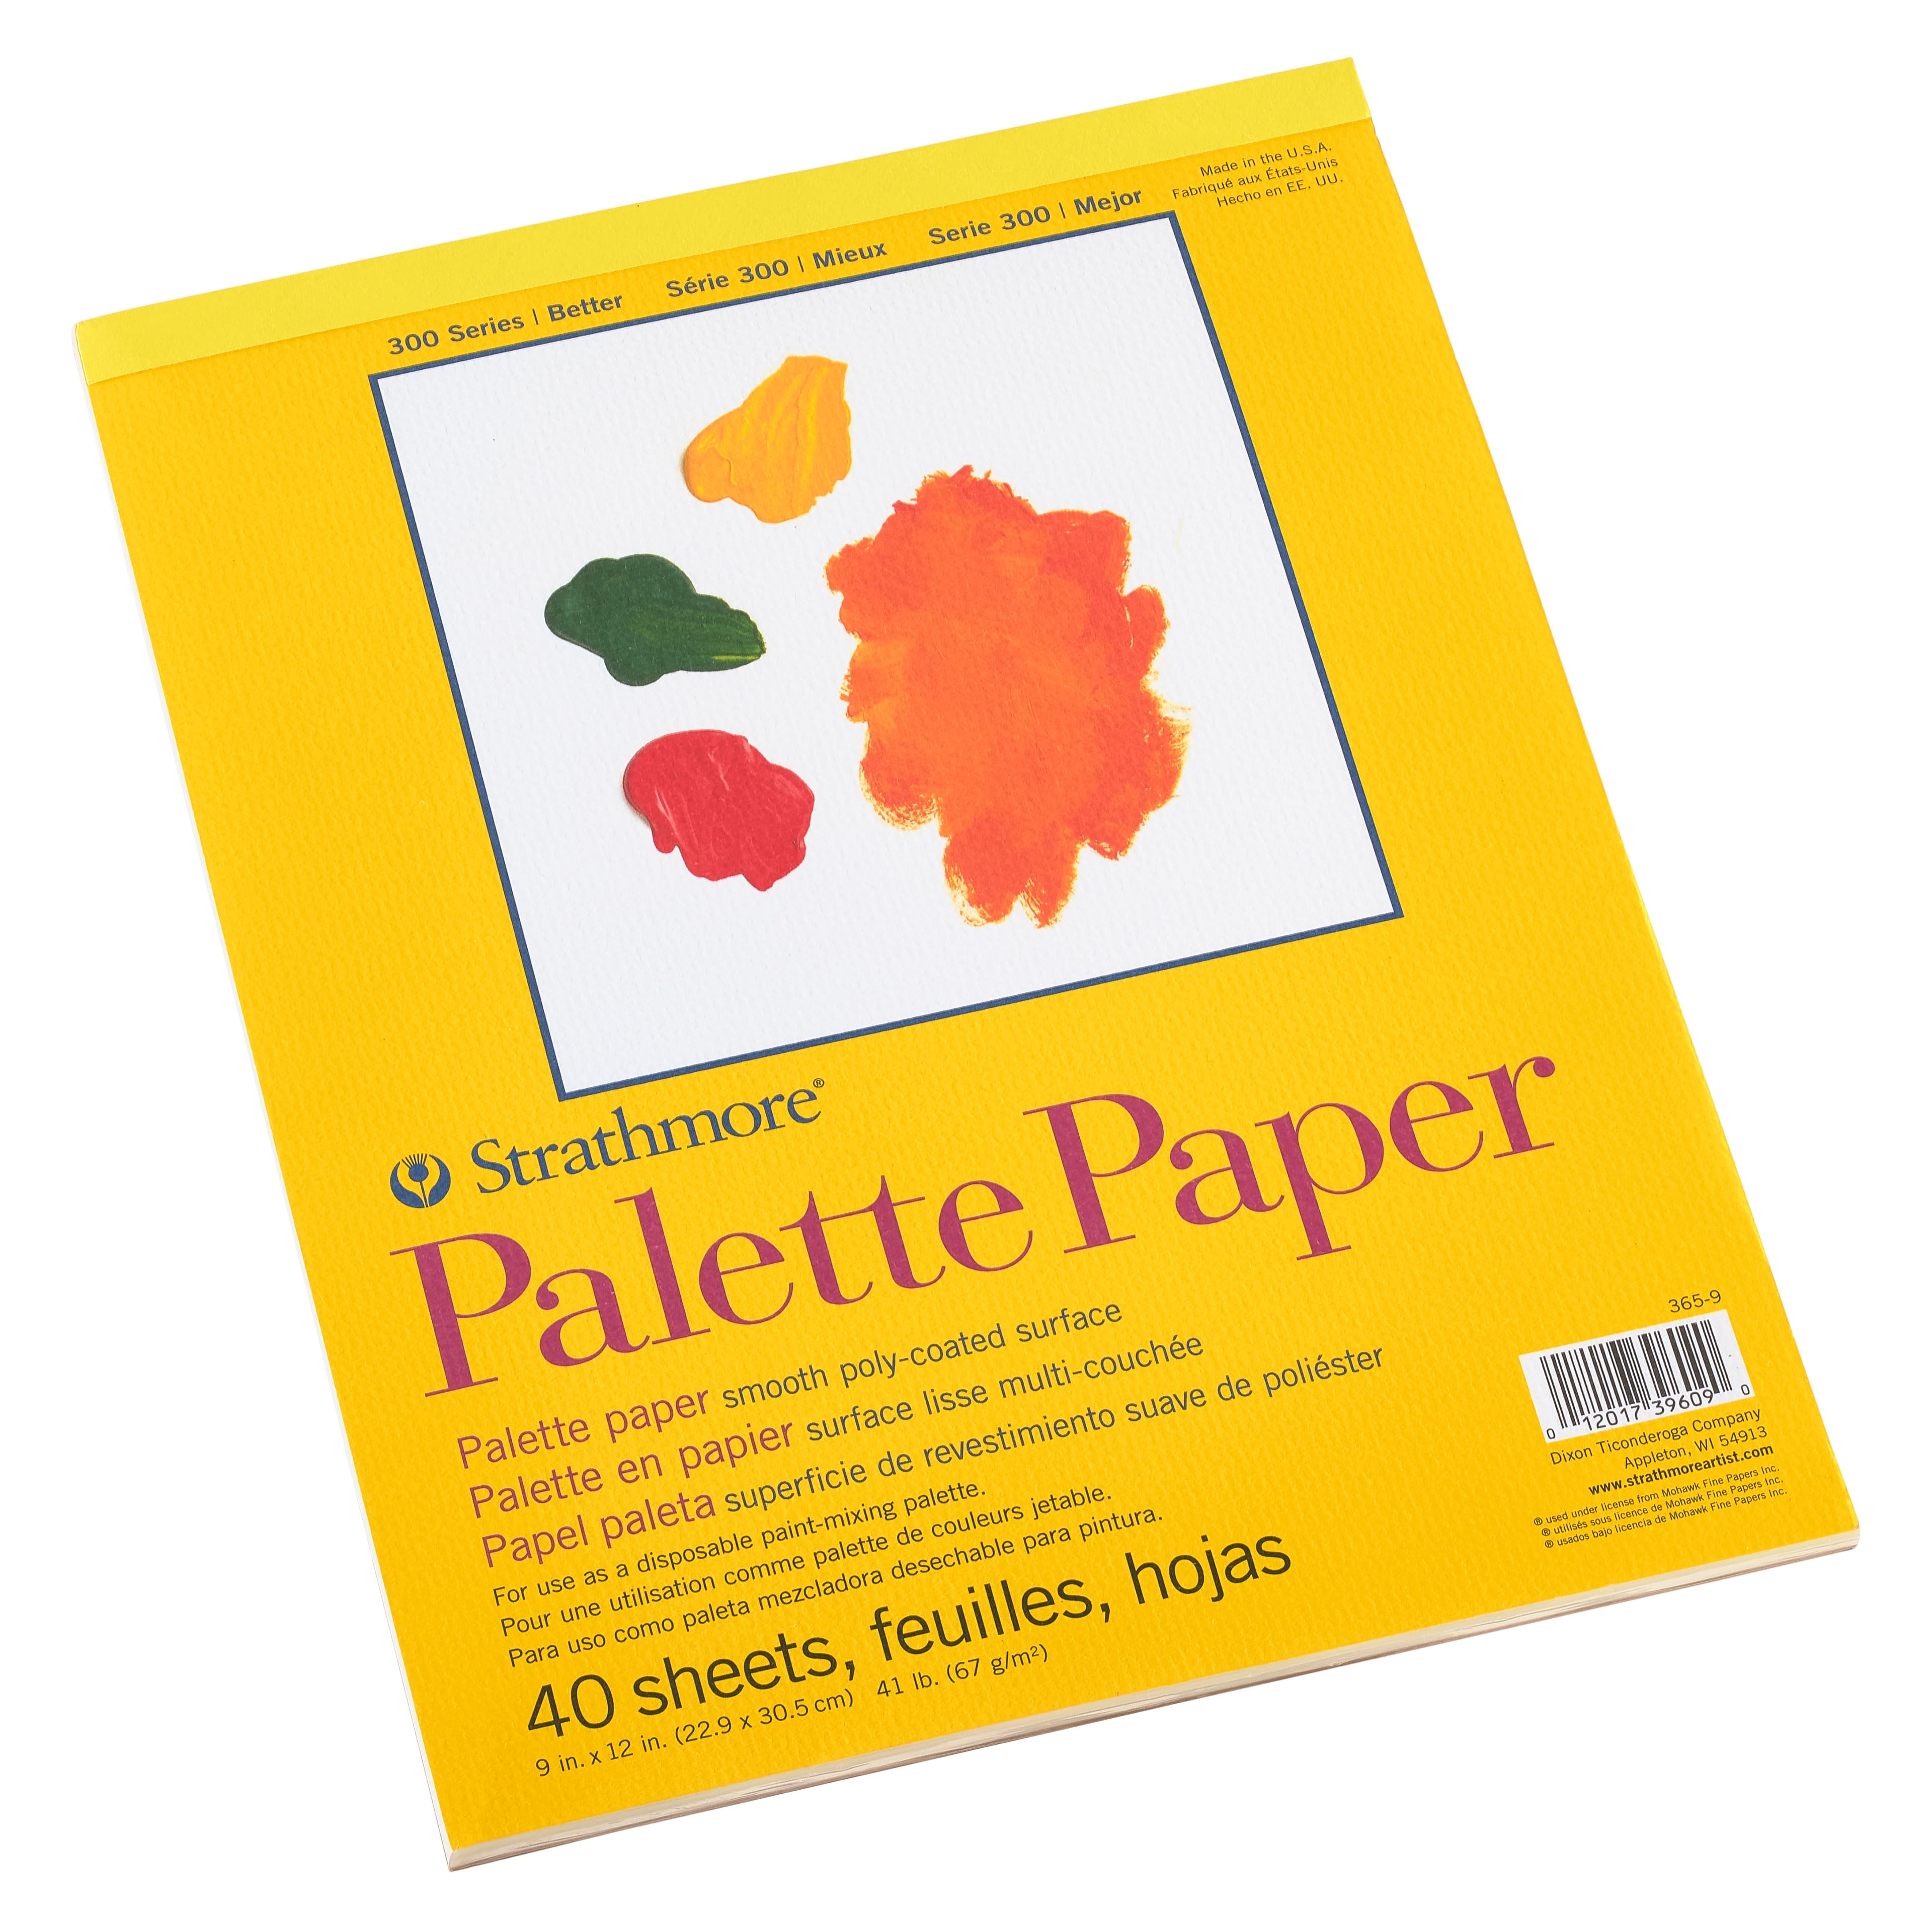  Strathmore 300 Series Palette Paper Pad, Tape Bound